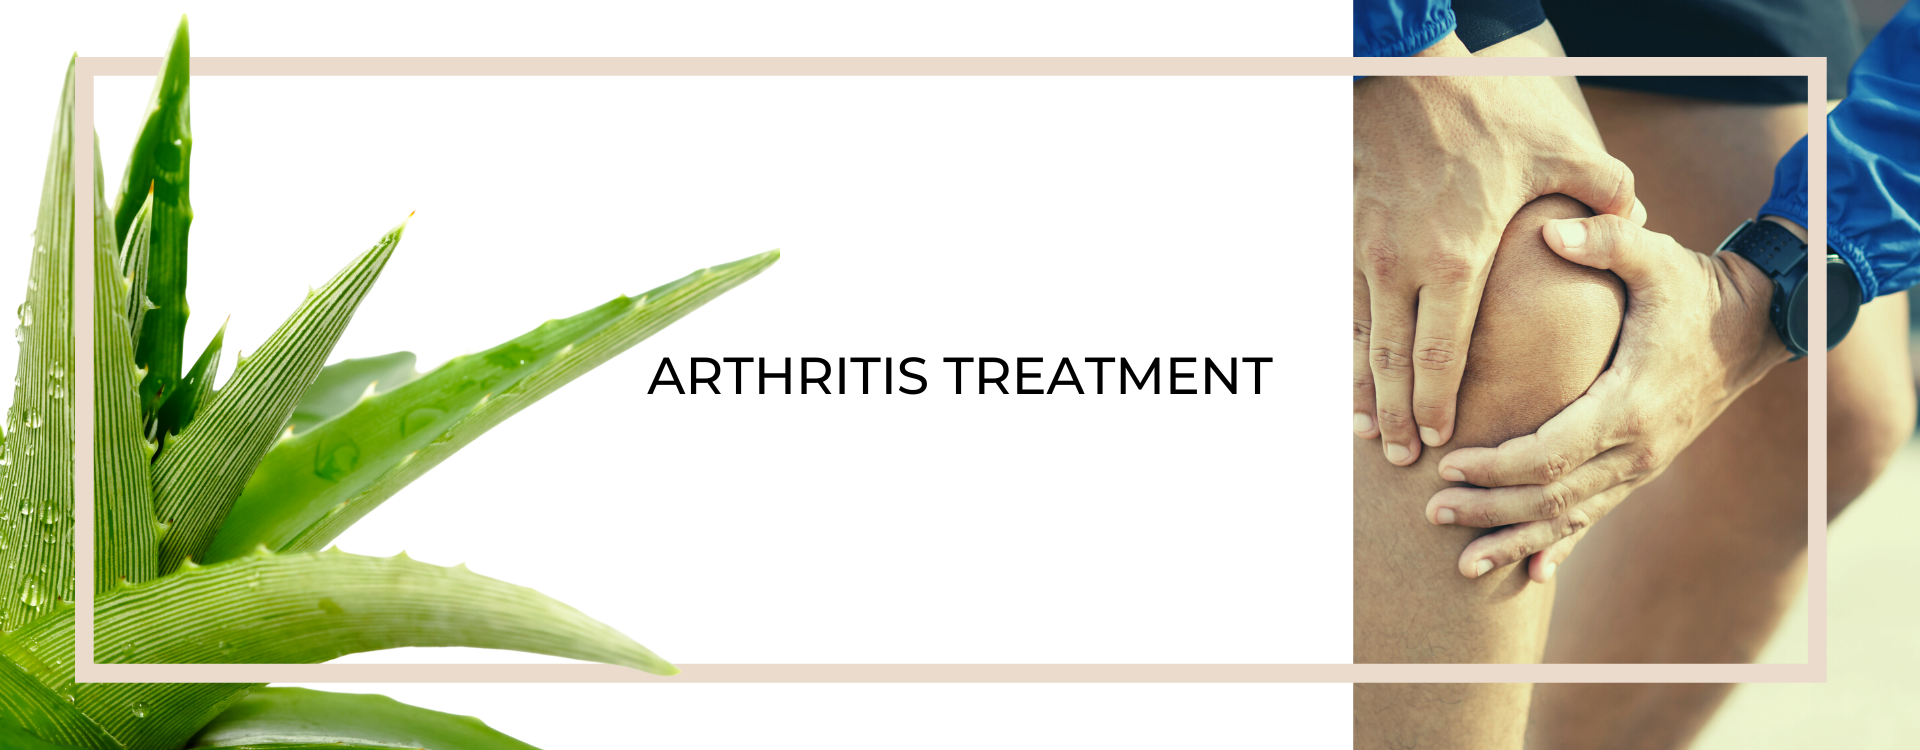 Aloe Vera for Arthritis Treatment